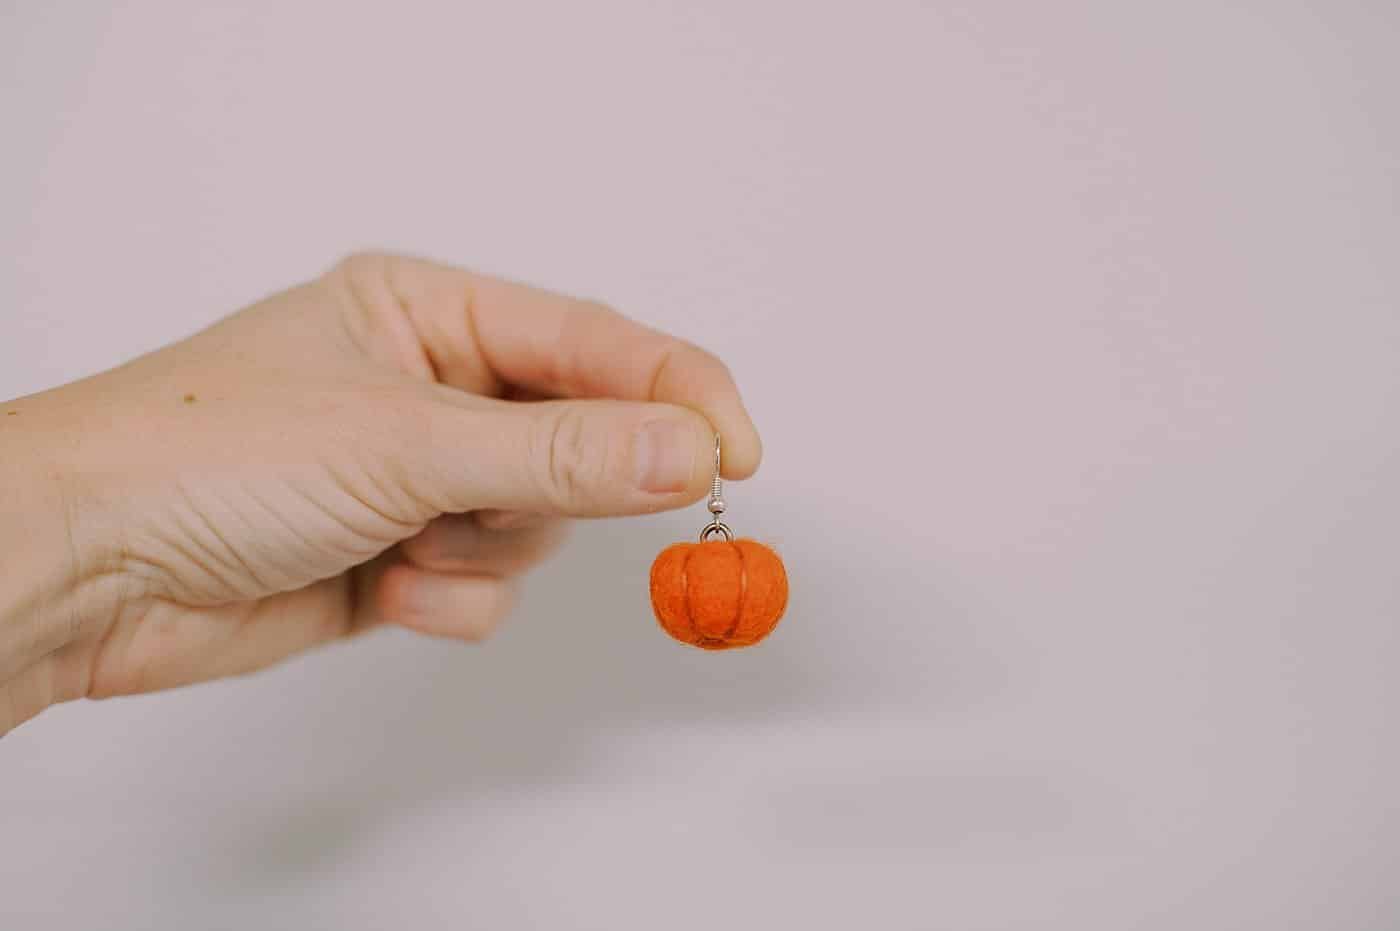 How to make felt ball pumpkin earrings for fall or Halloween.